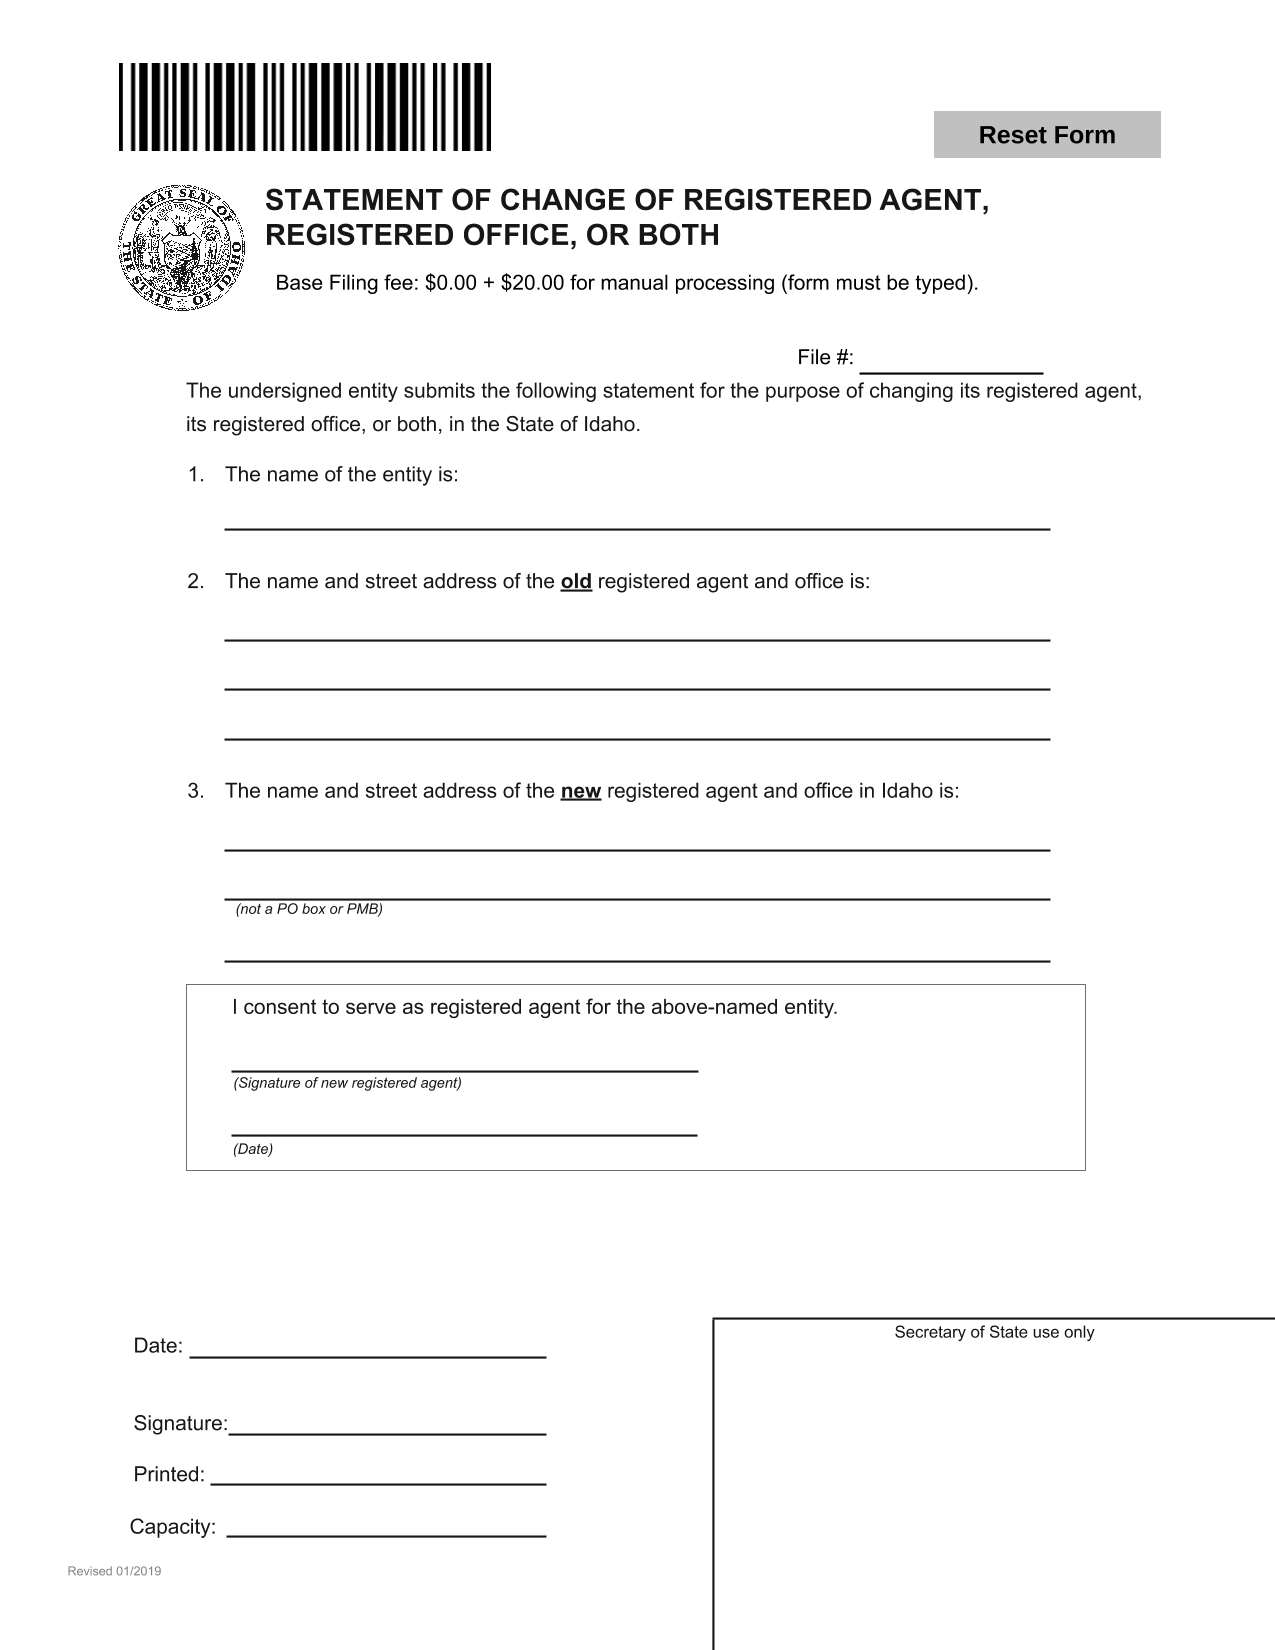 idaho-statement-of-change-of-registered-agent